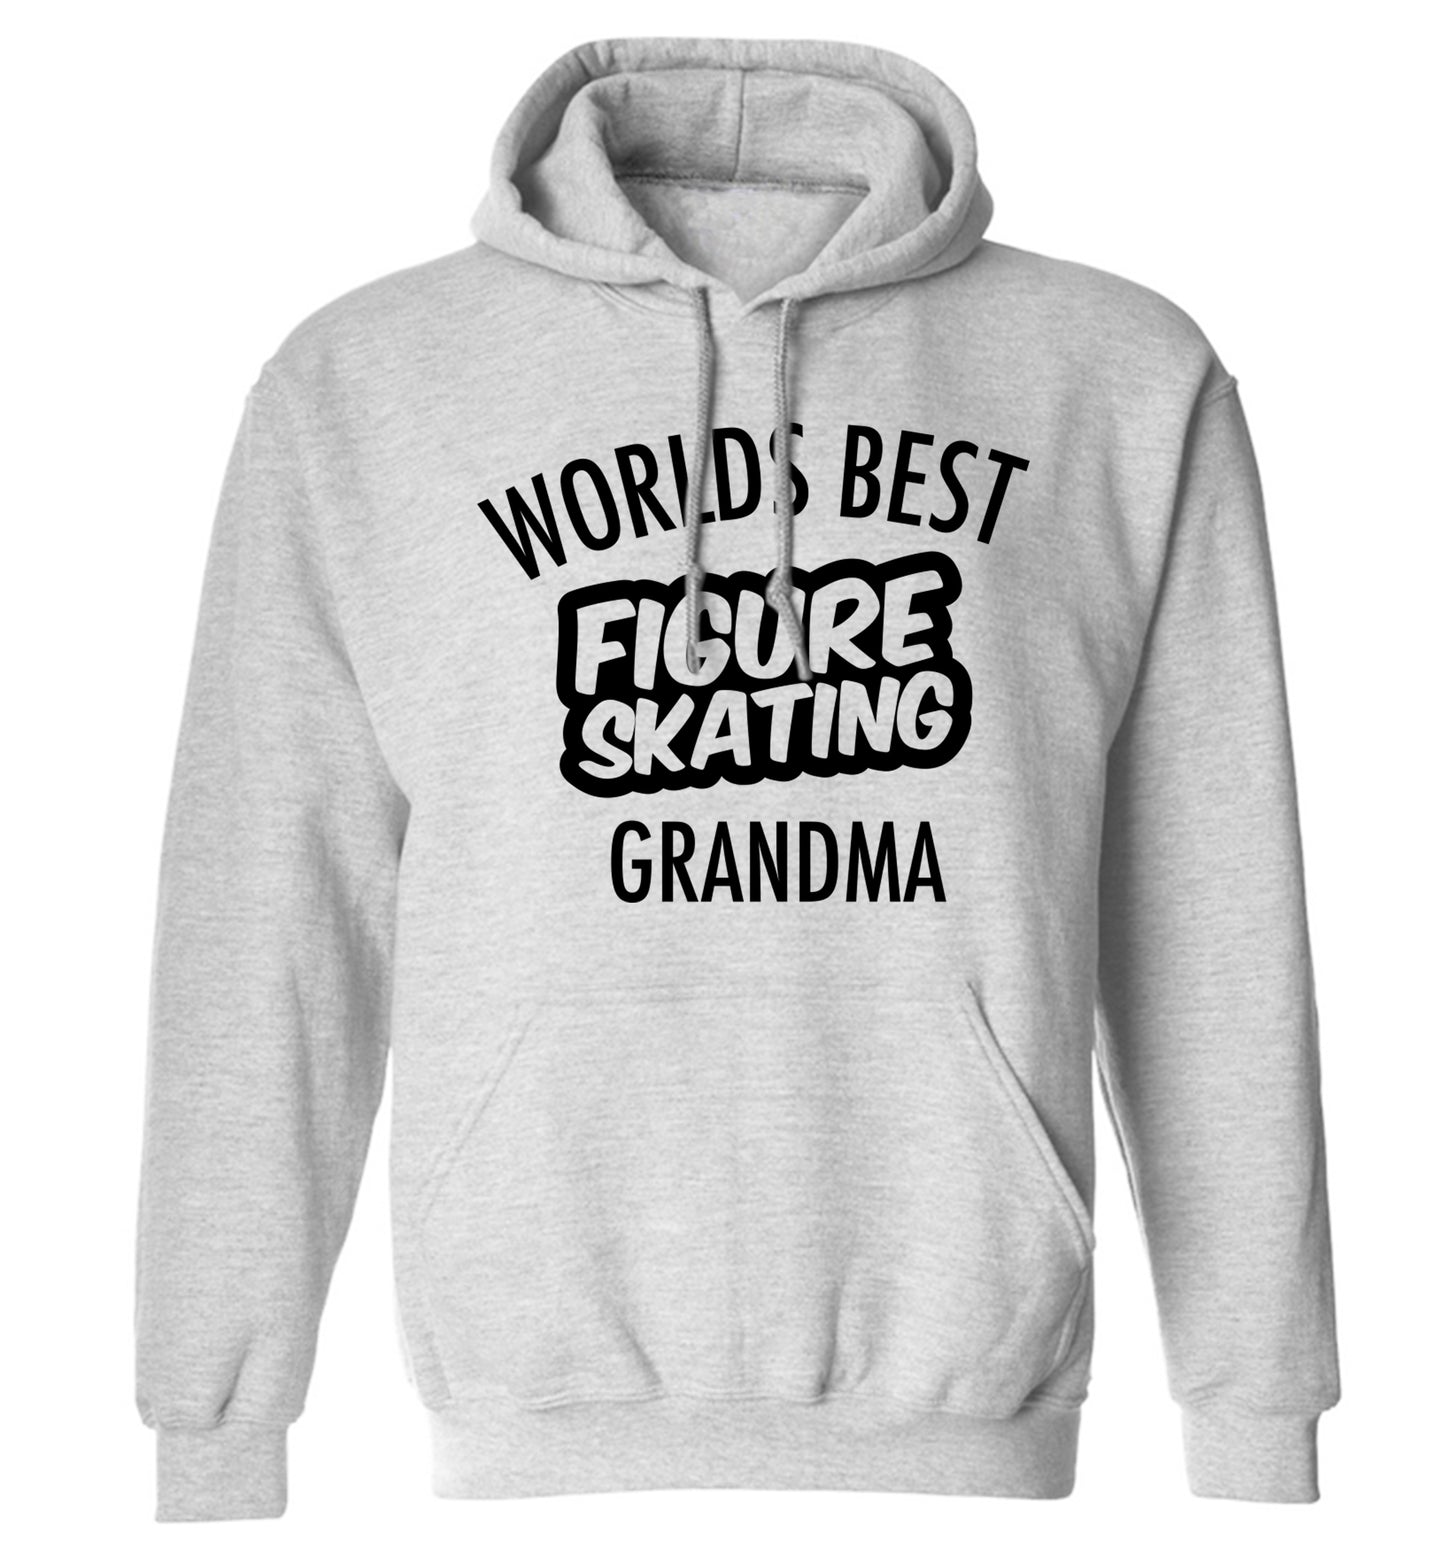 Worlds best figure skating grandma adults unisexgrey hoodie 2XL